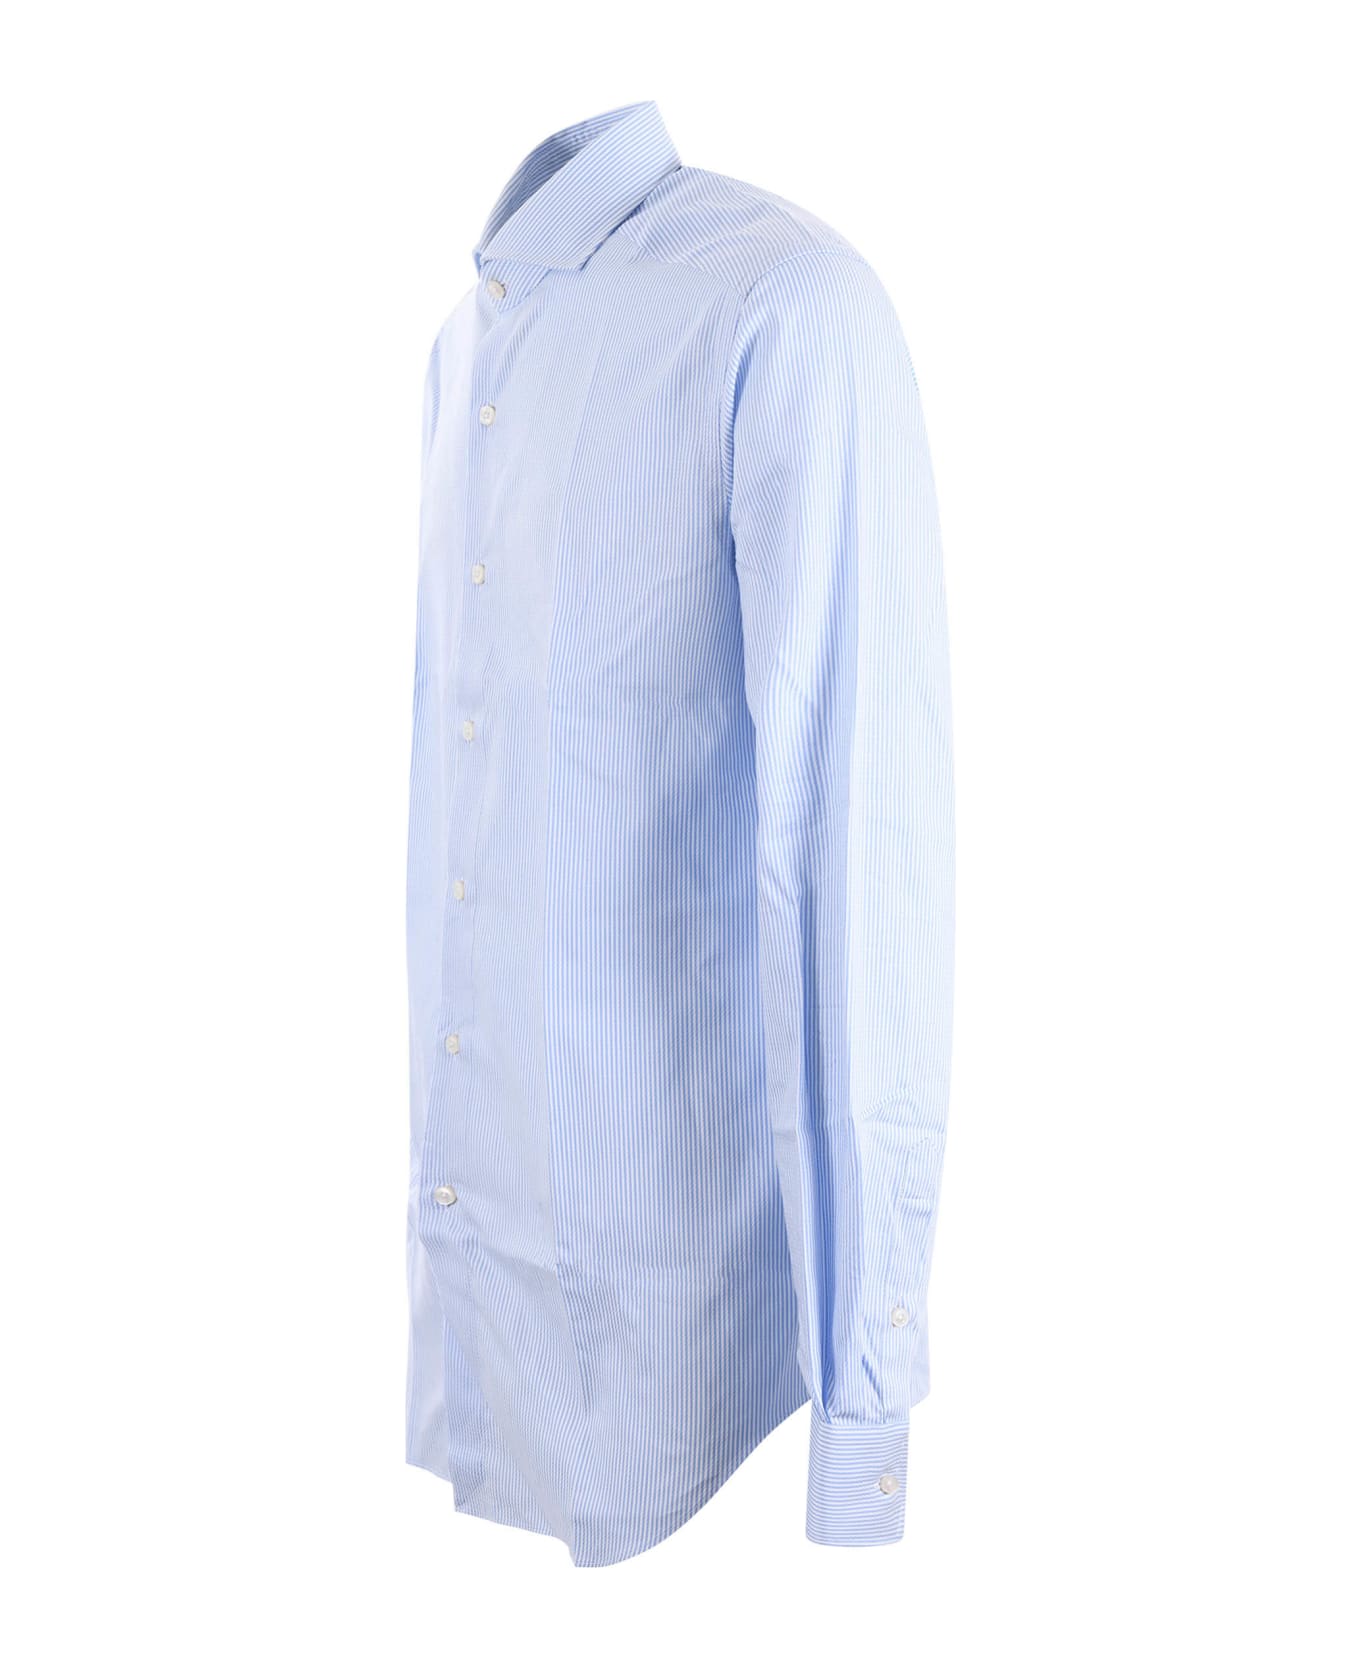 Xacus Shirt - Bianco/celeste